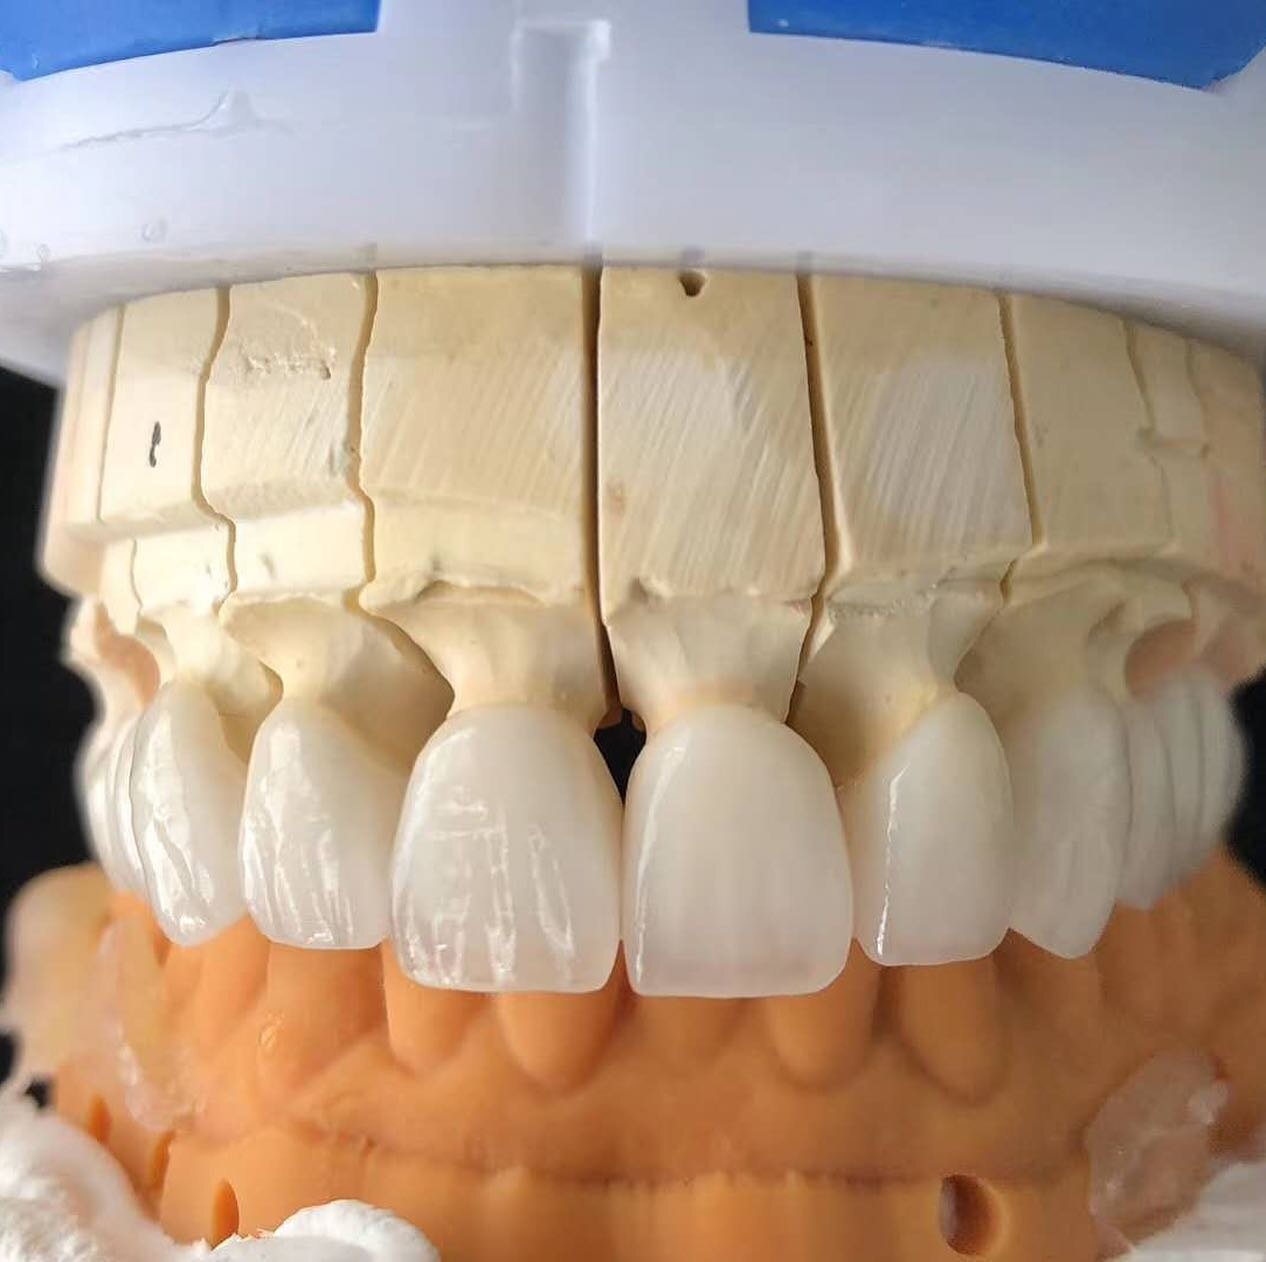 eMax .
.
.
.
.
#dentallab #dentalhygiene #teethgoals #emaxcrowns #ceramicteeth #translucent #ivoclarvivandet #c14 #fullmouthrehabilitation